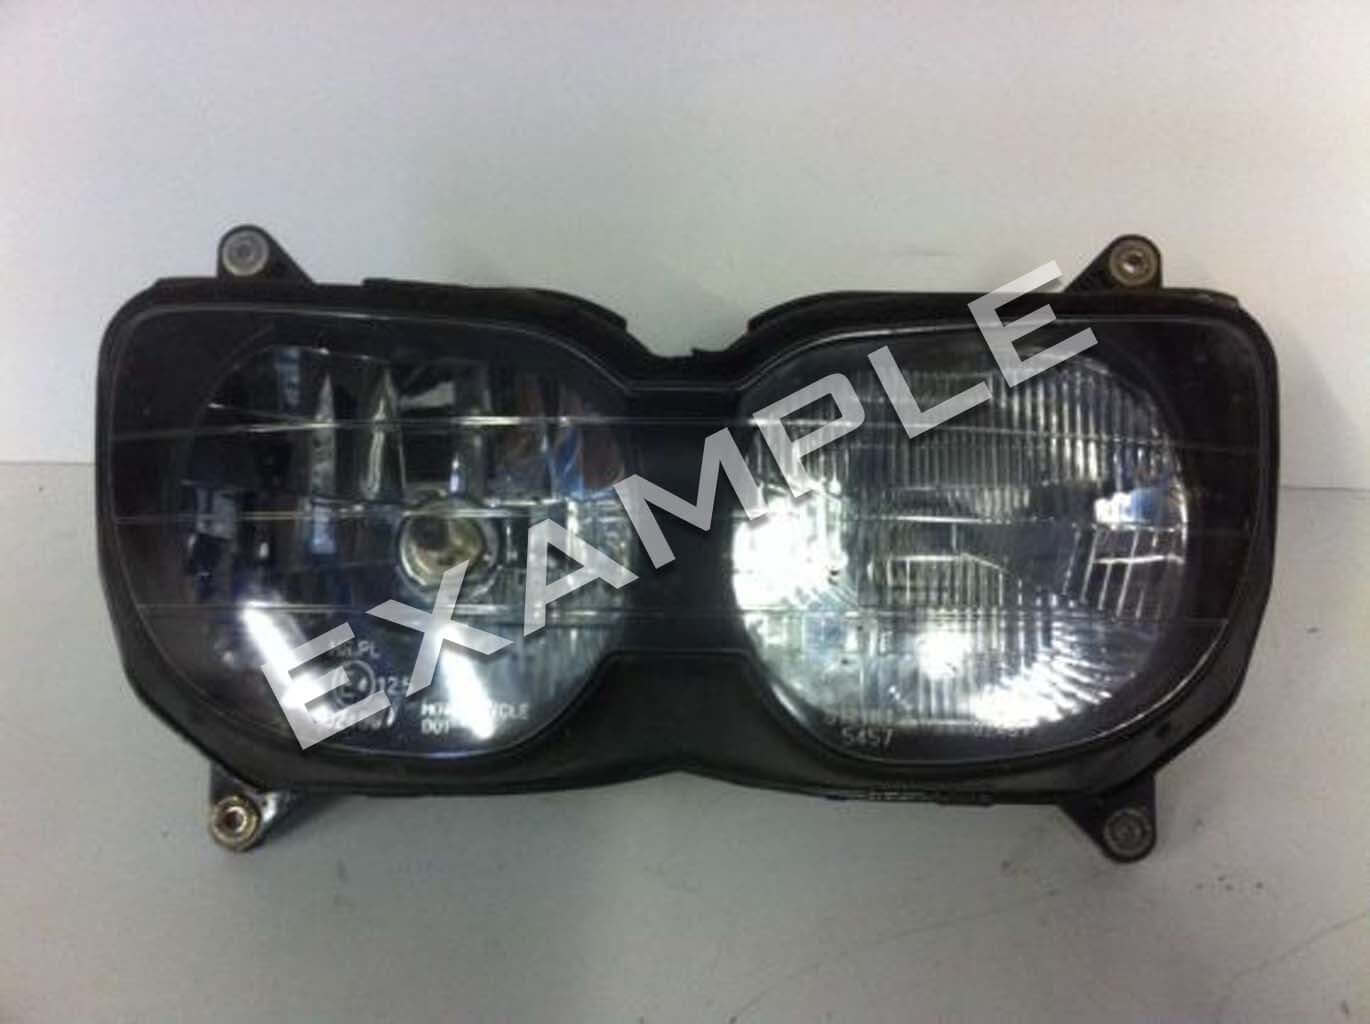 Honda CBR900RR SC33 Fireblade 97-00 HID bi-xenon headlight upgrade kit